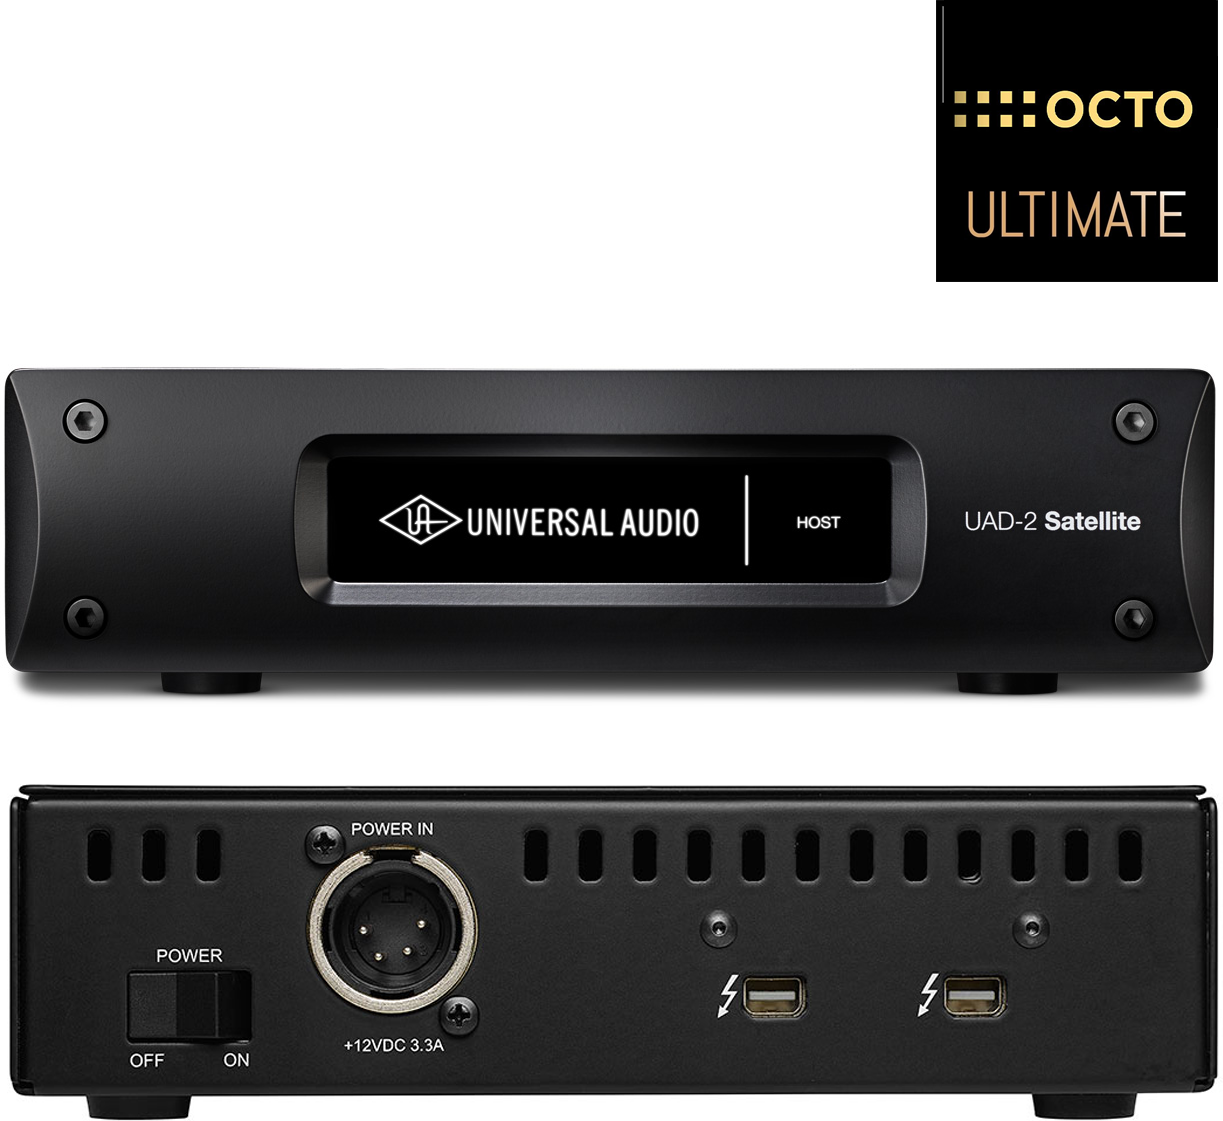 Universal Audio Uad-2 Satellite Thunderbolt Octo Ultimate 7 - USB audio-interface - Main picture